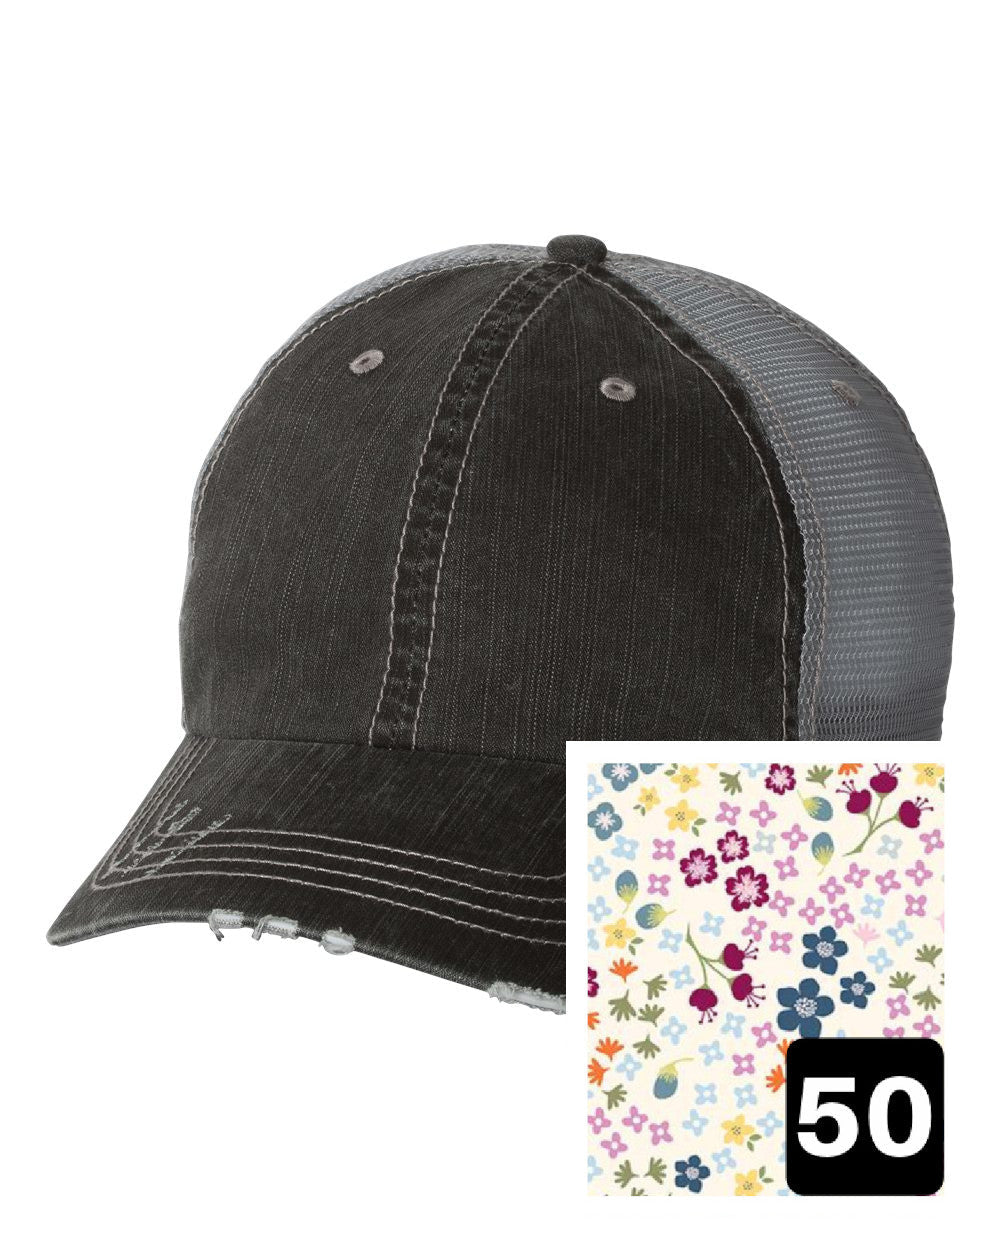 gray distressed trucker hat with gray geometric fabric state of Iowa